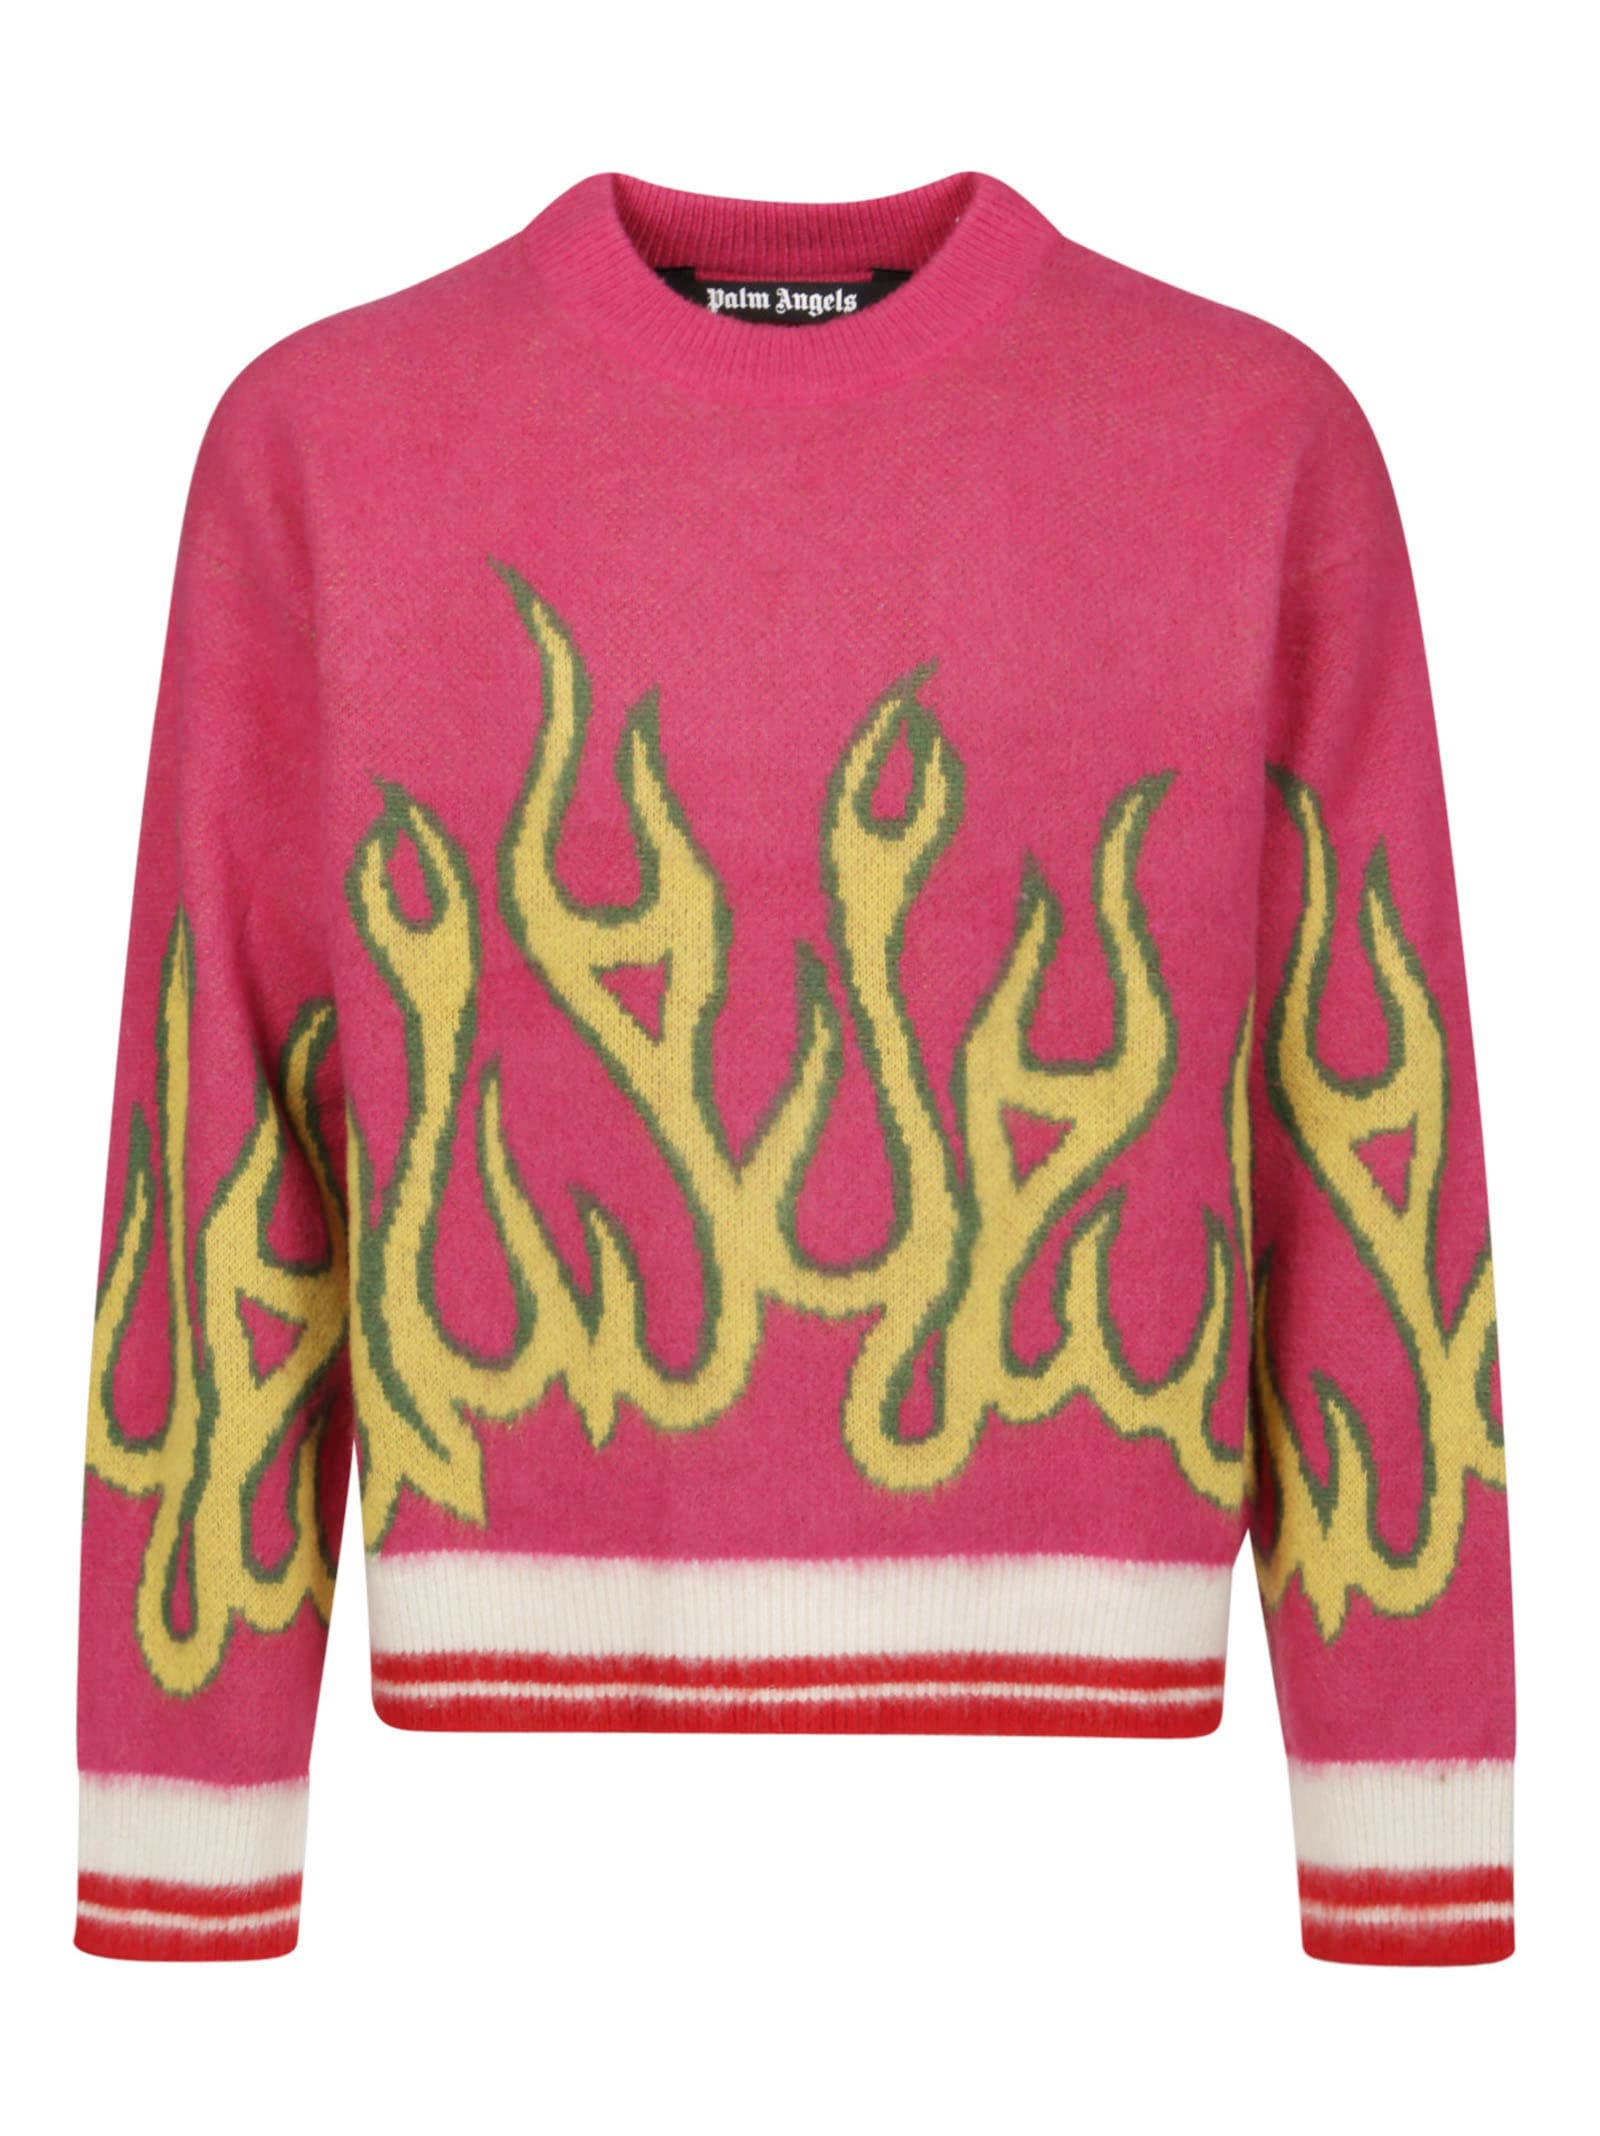 Palm Angels Burning Sweater